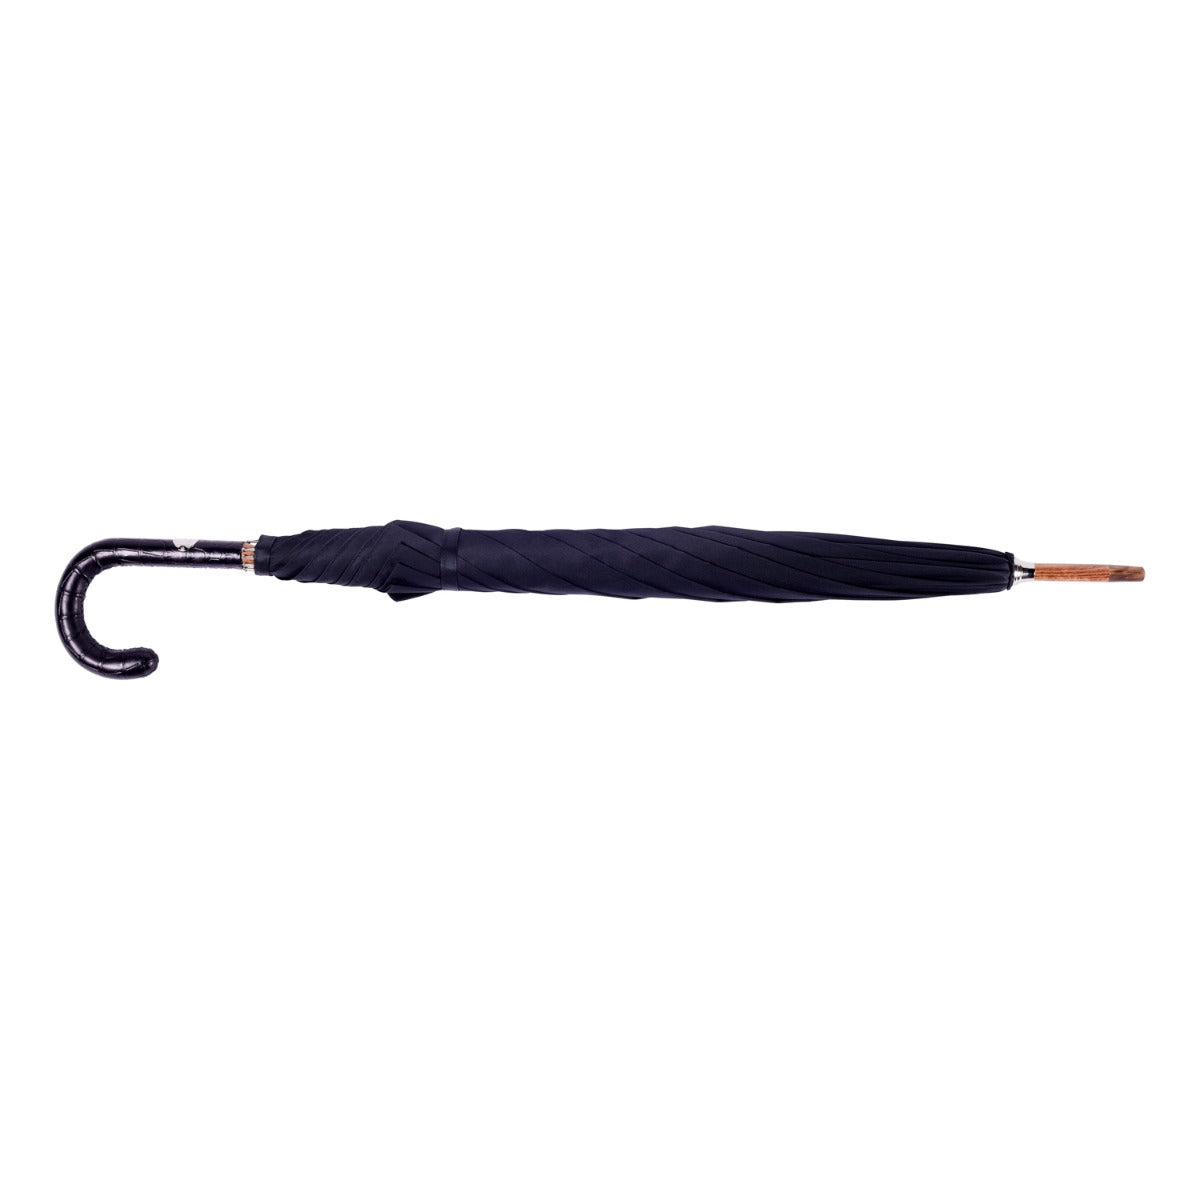 A KirbyAllison.com Black Alligator Solid Stick with Black Canopy umbrella.